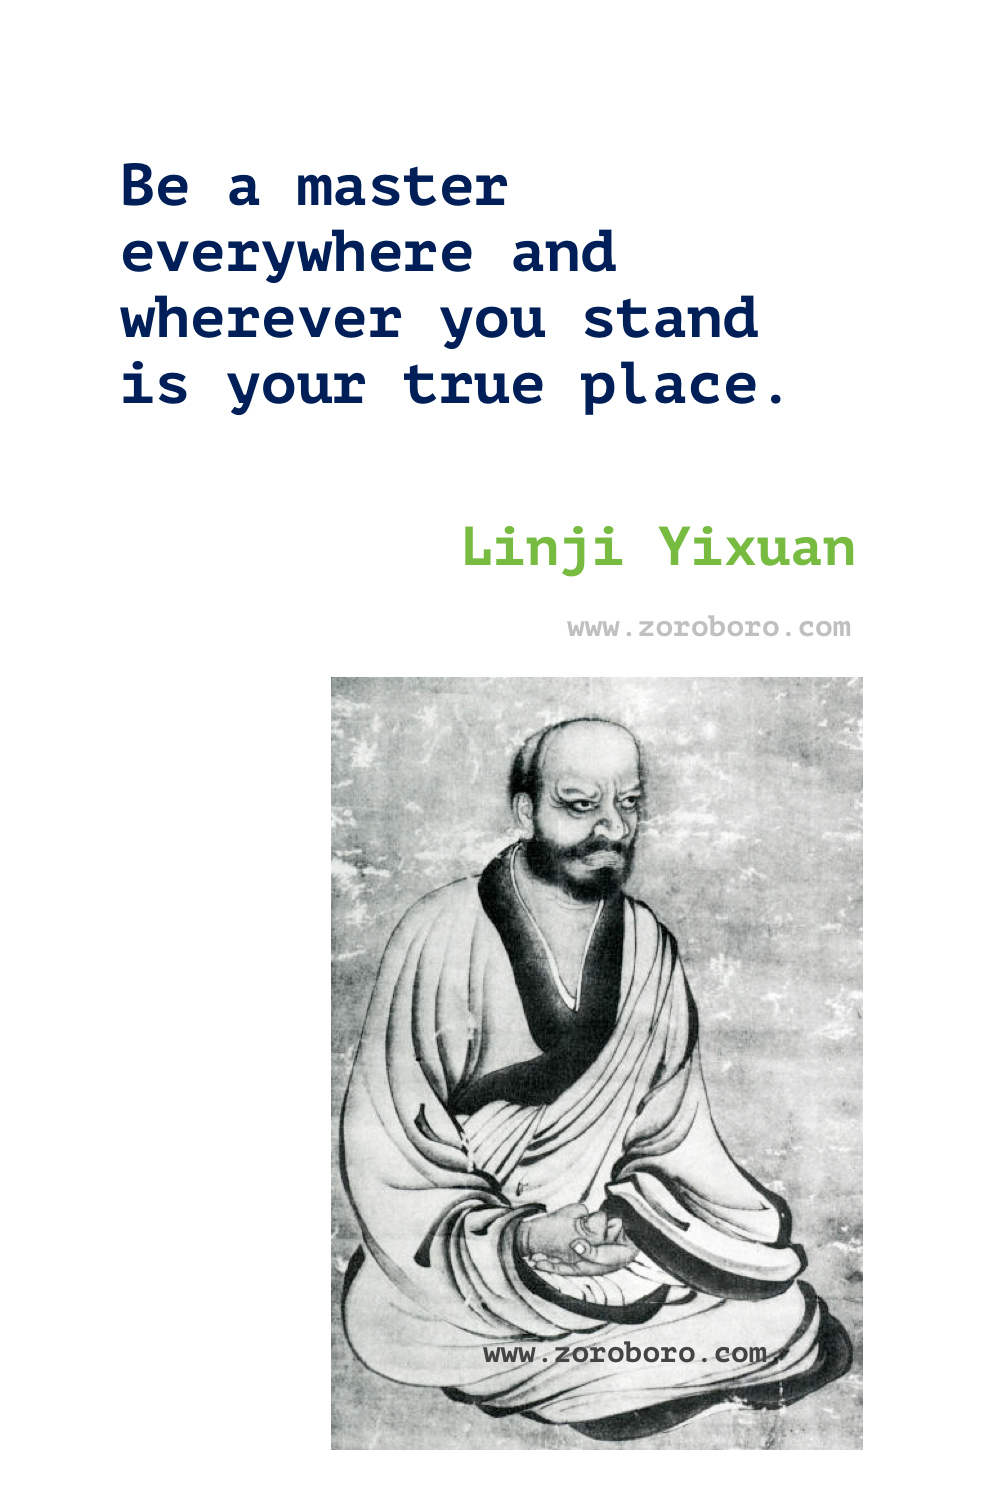 Linji Yixuan Quotes. Spiritual, Dharma, & Mind. Linji Yixuan Philosophy. Linji Yixuan Quotes. Words Of Wisdom.